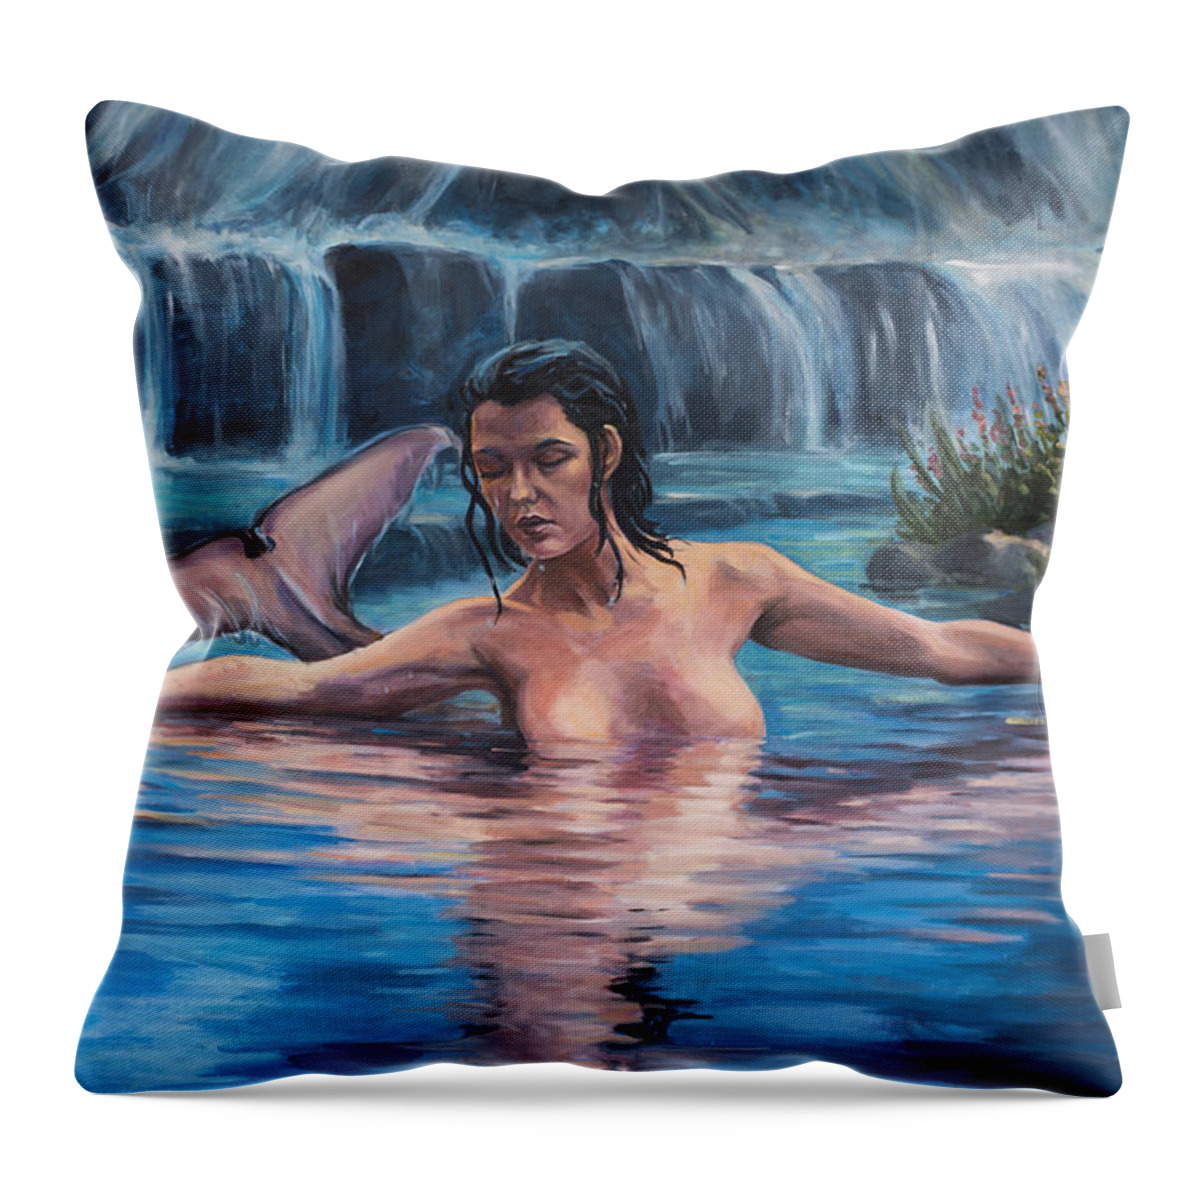 Mermaid Throw Pillow featuring the painting Sweet water mermaid by Marco Busoni